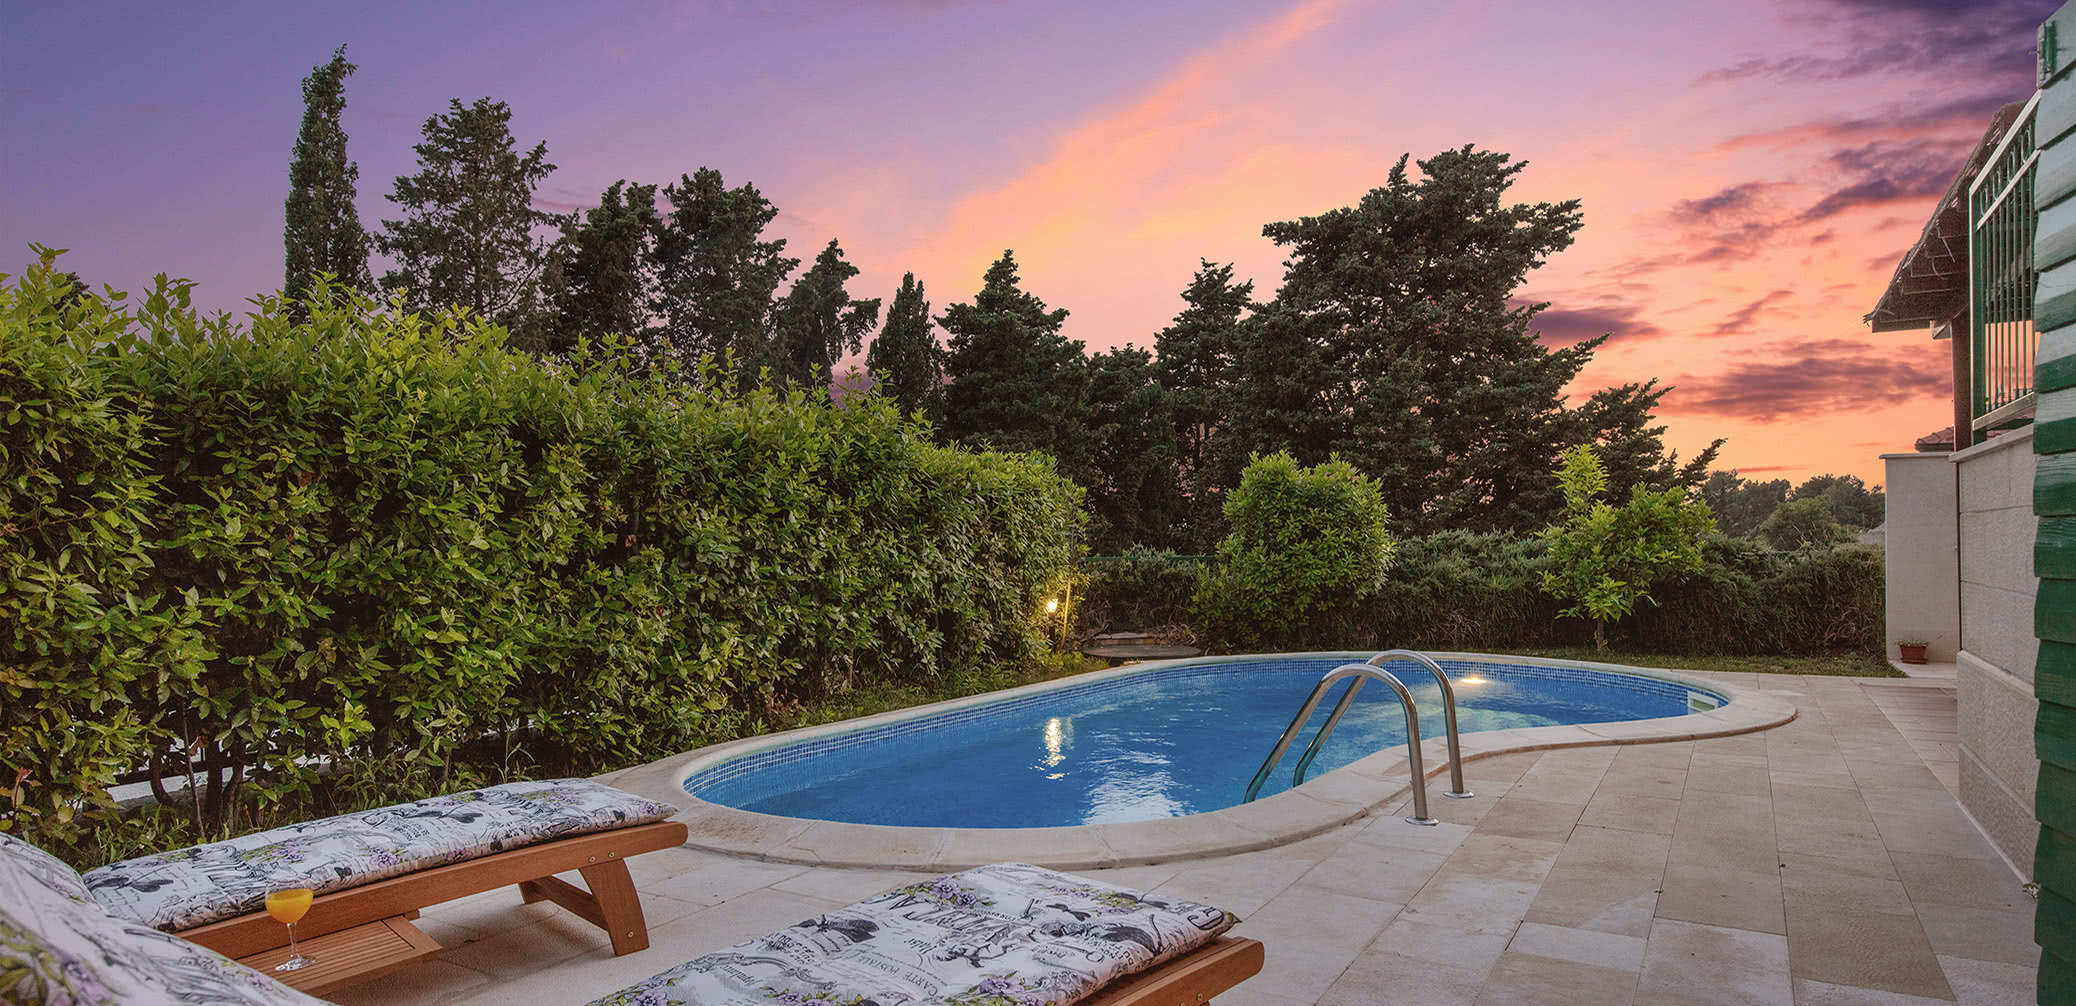 10-best-luxury-villas-in-hvar-croatia